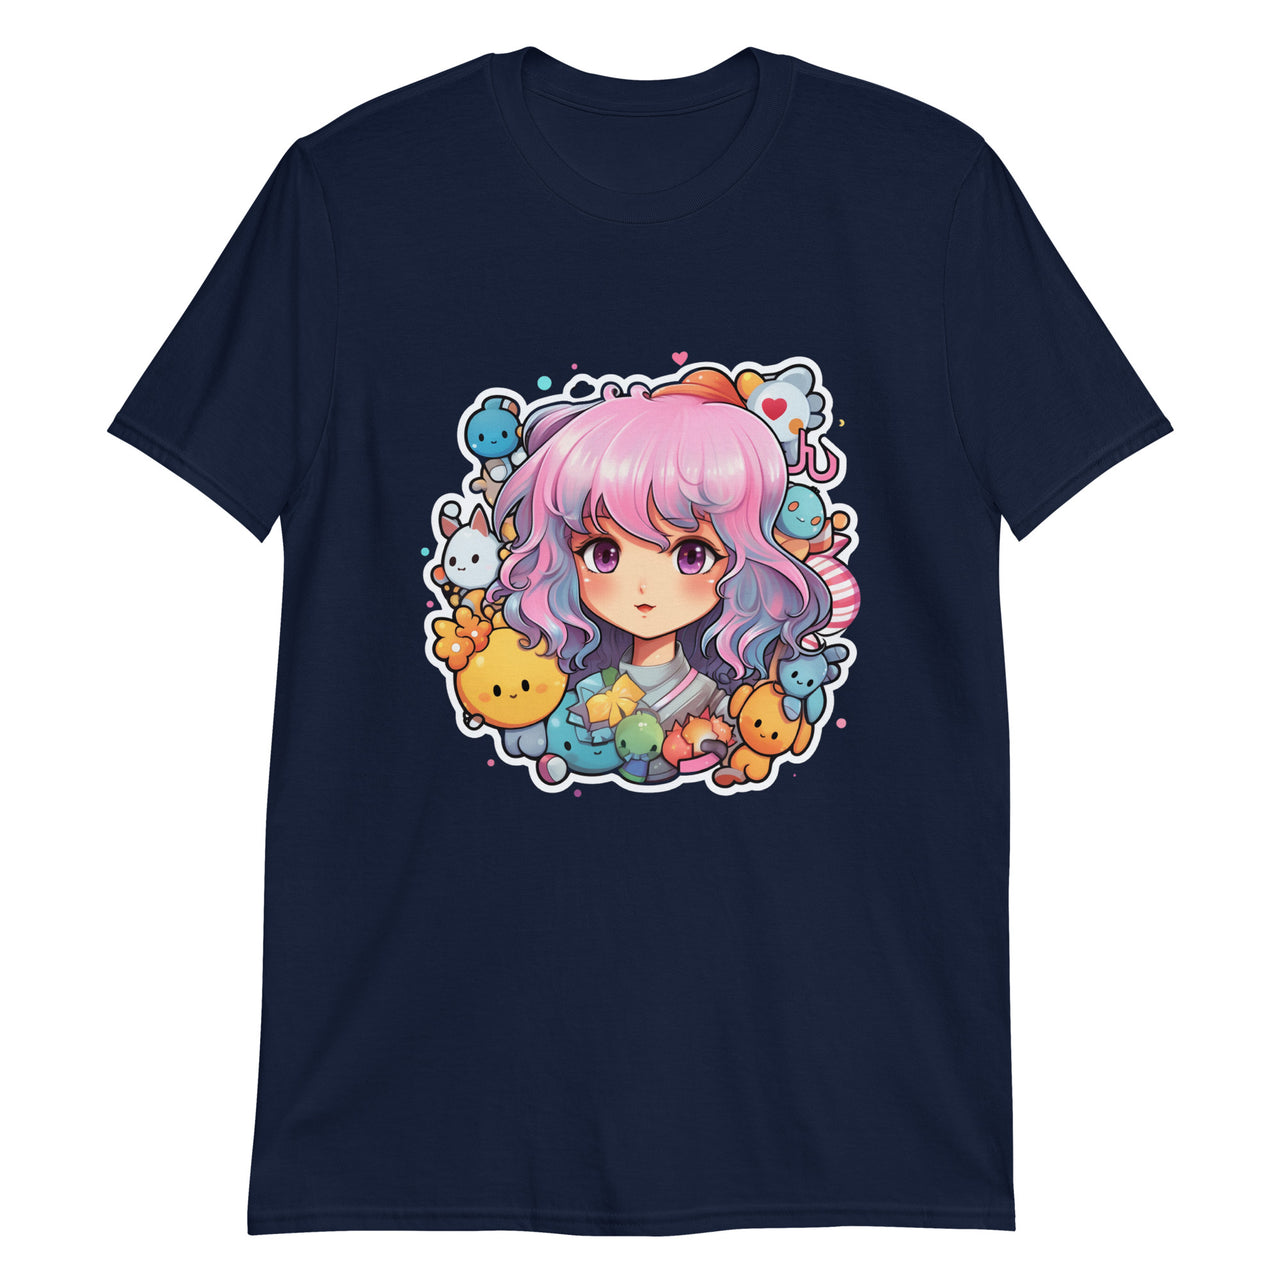 Kawaii Kingdom Anime Girl Cute Critters T-Shirt